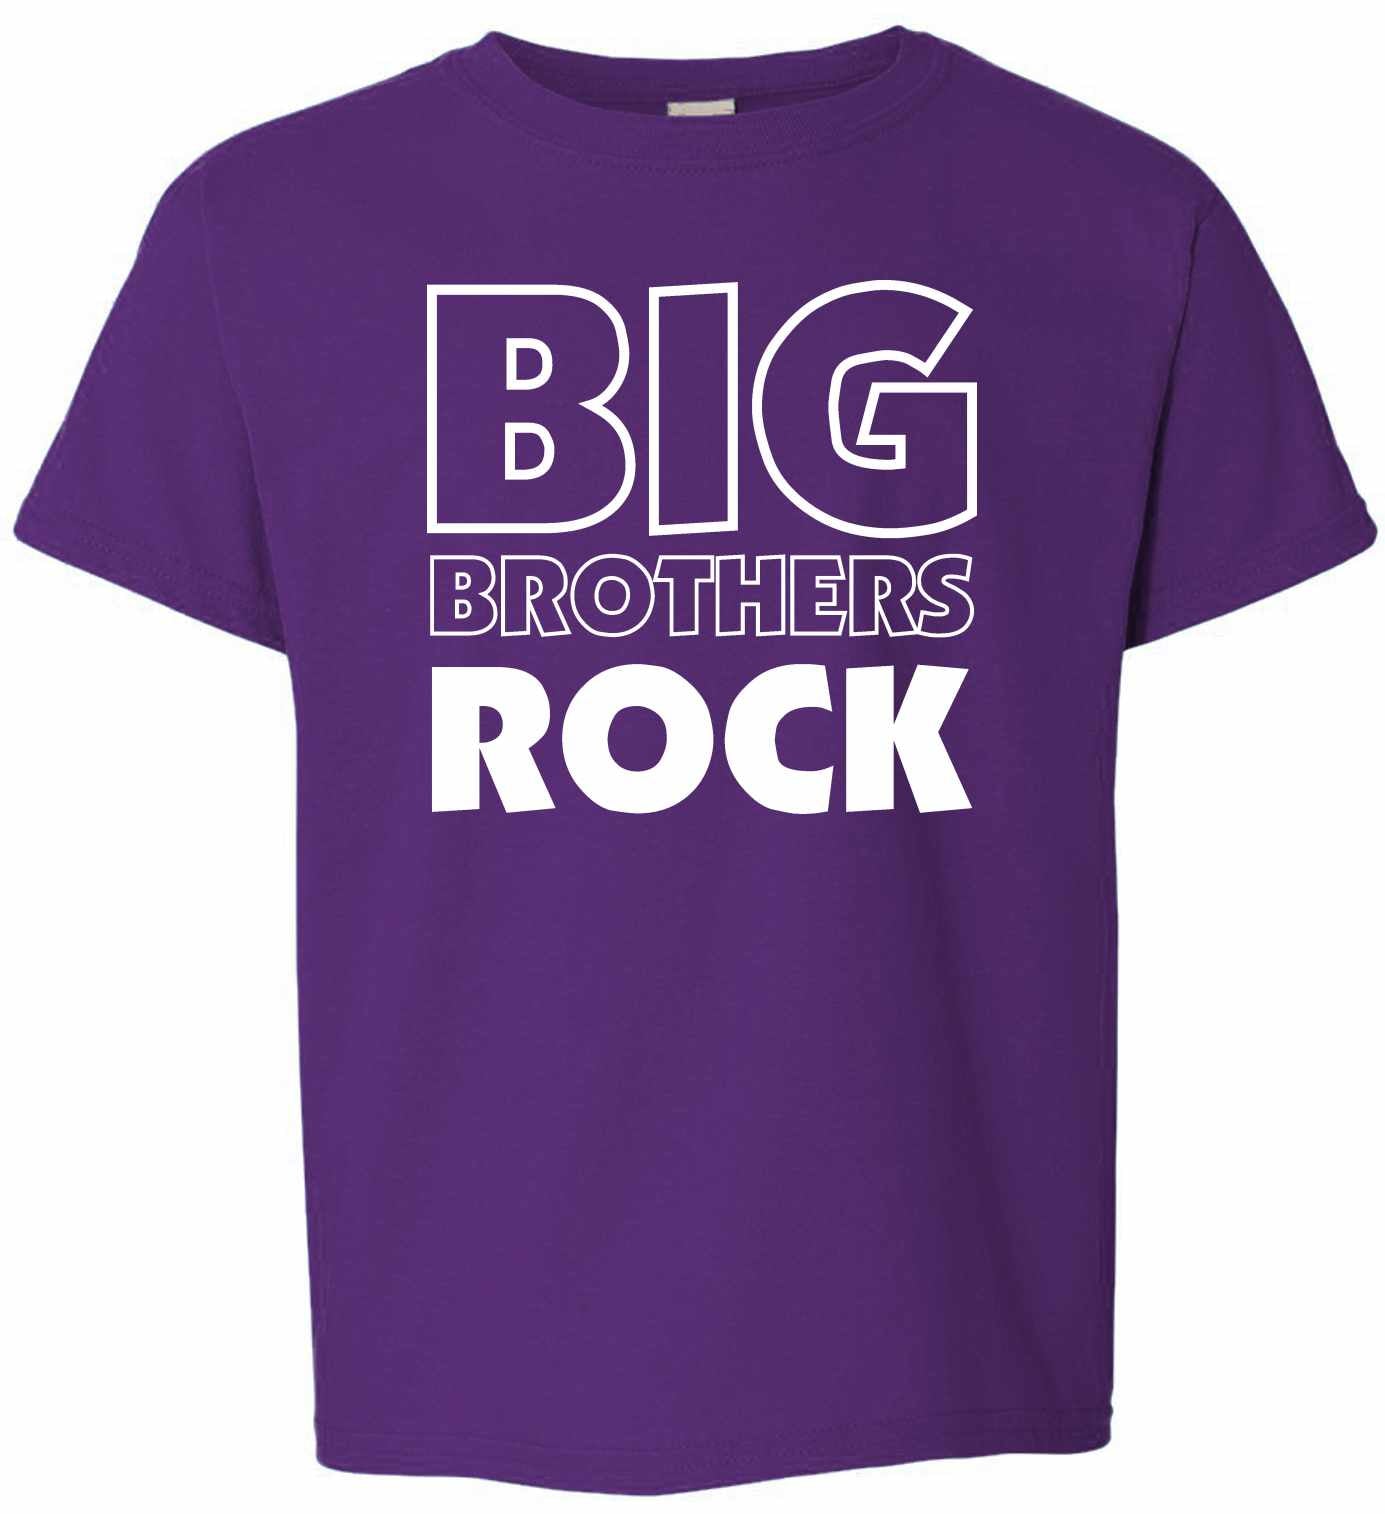 Big Brothers Rock on Kids T-Shirt